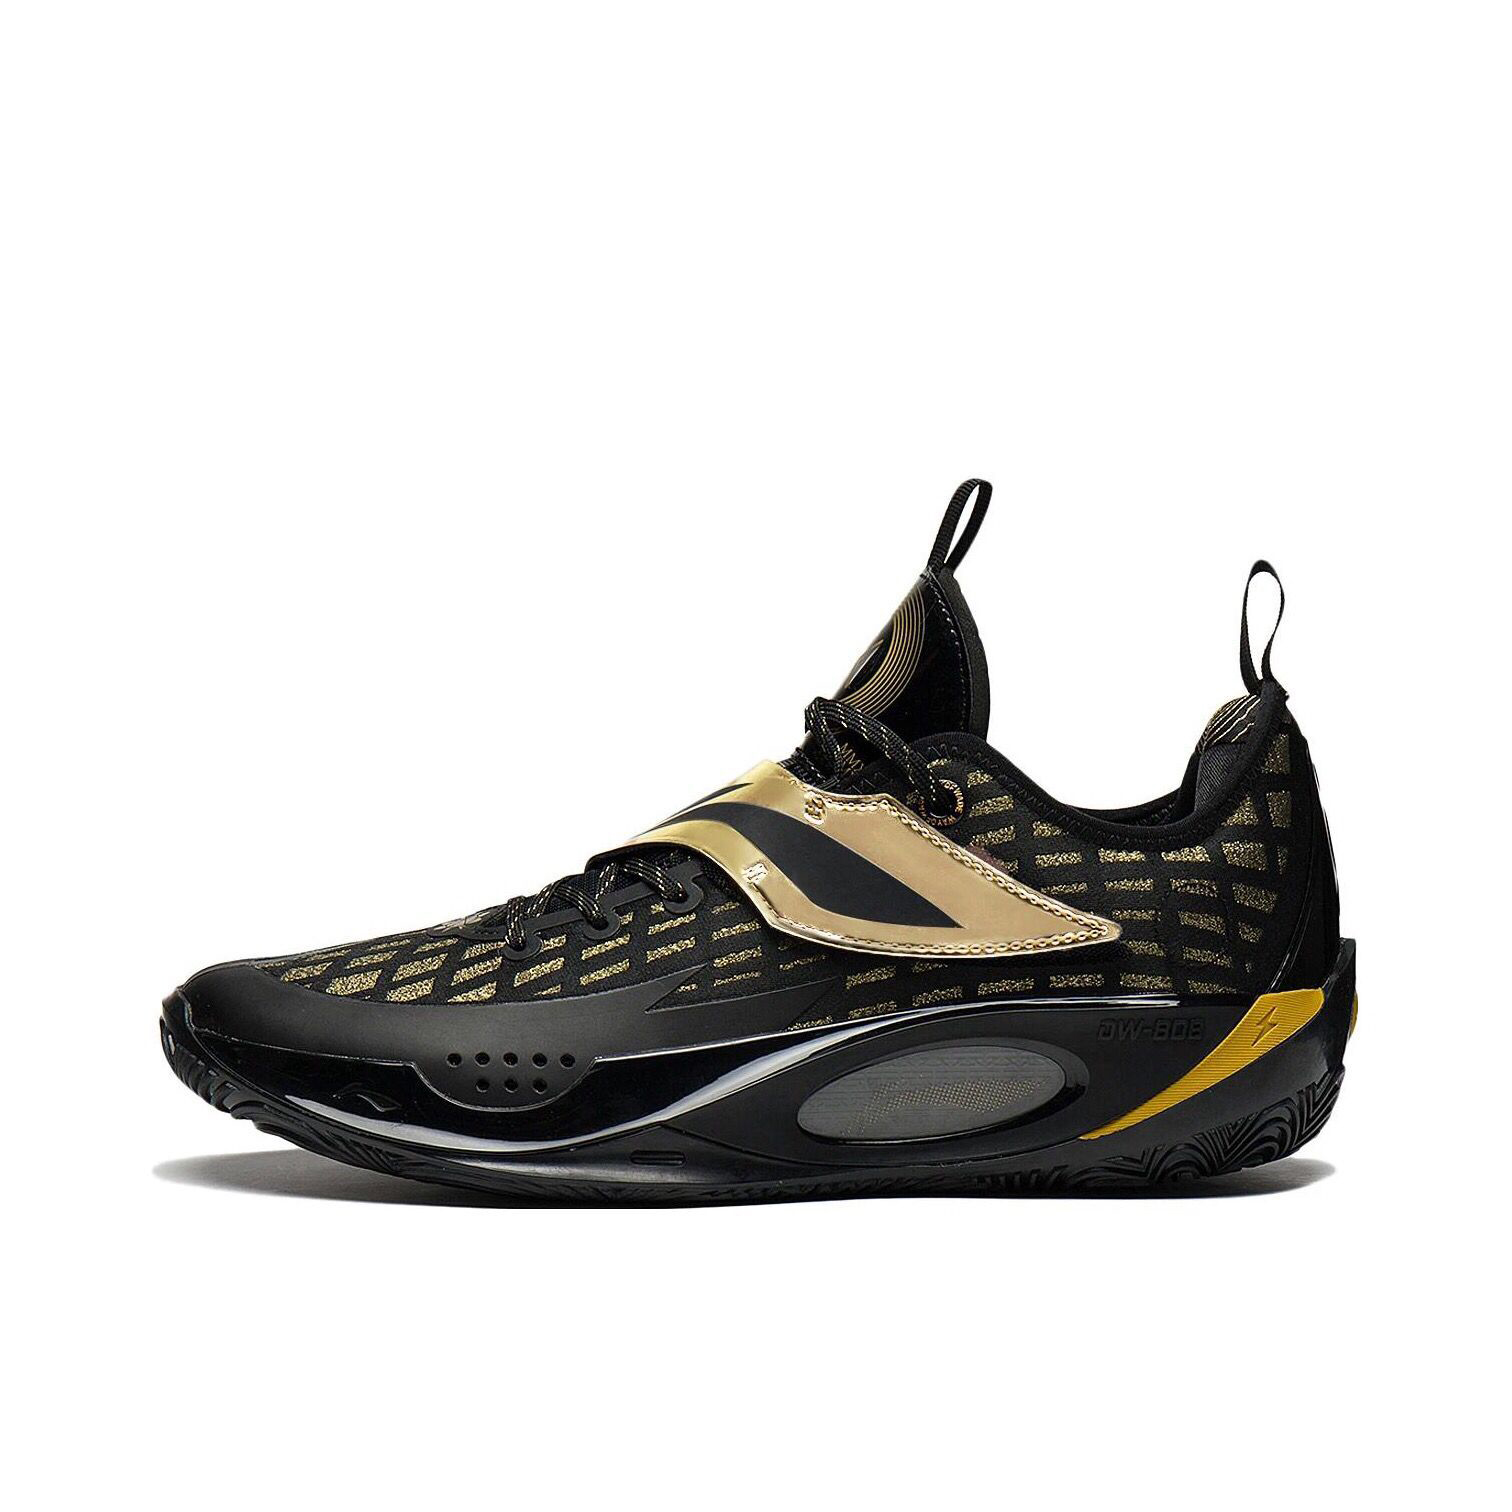 LiNing Way of Wade 808 II V2 “Dynasty” Basketball Shoes Black/Gold 